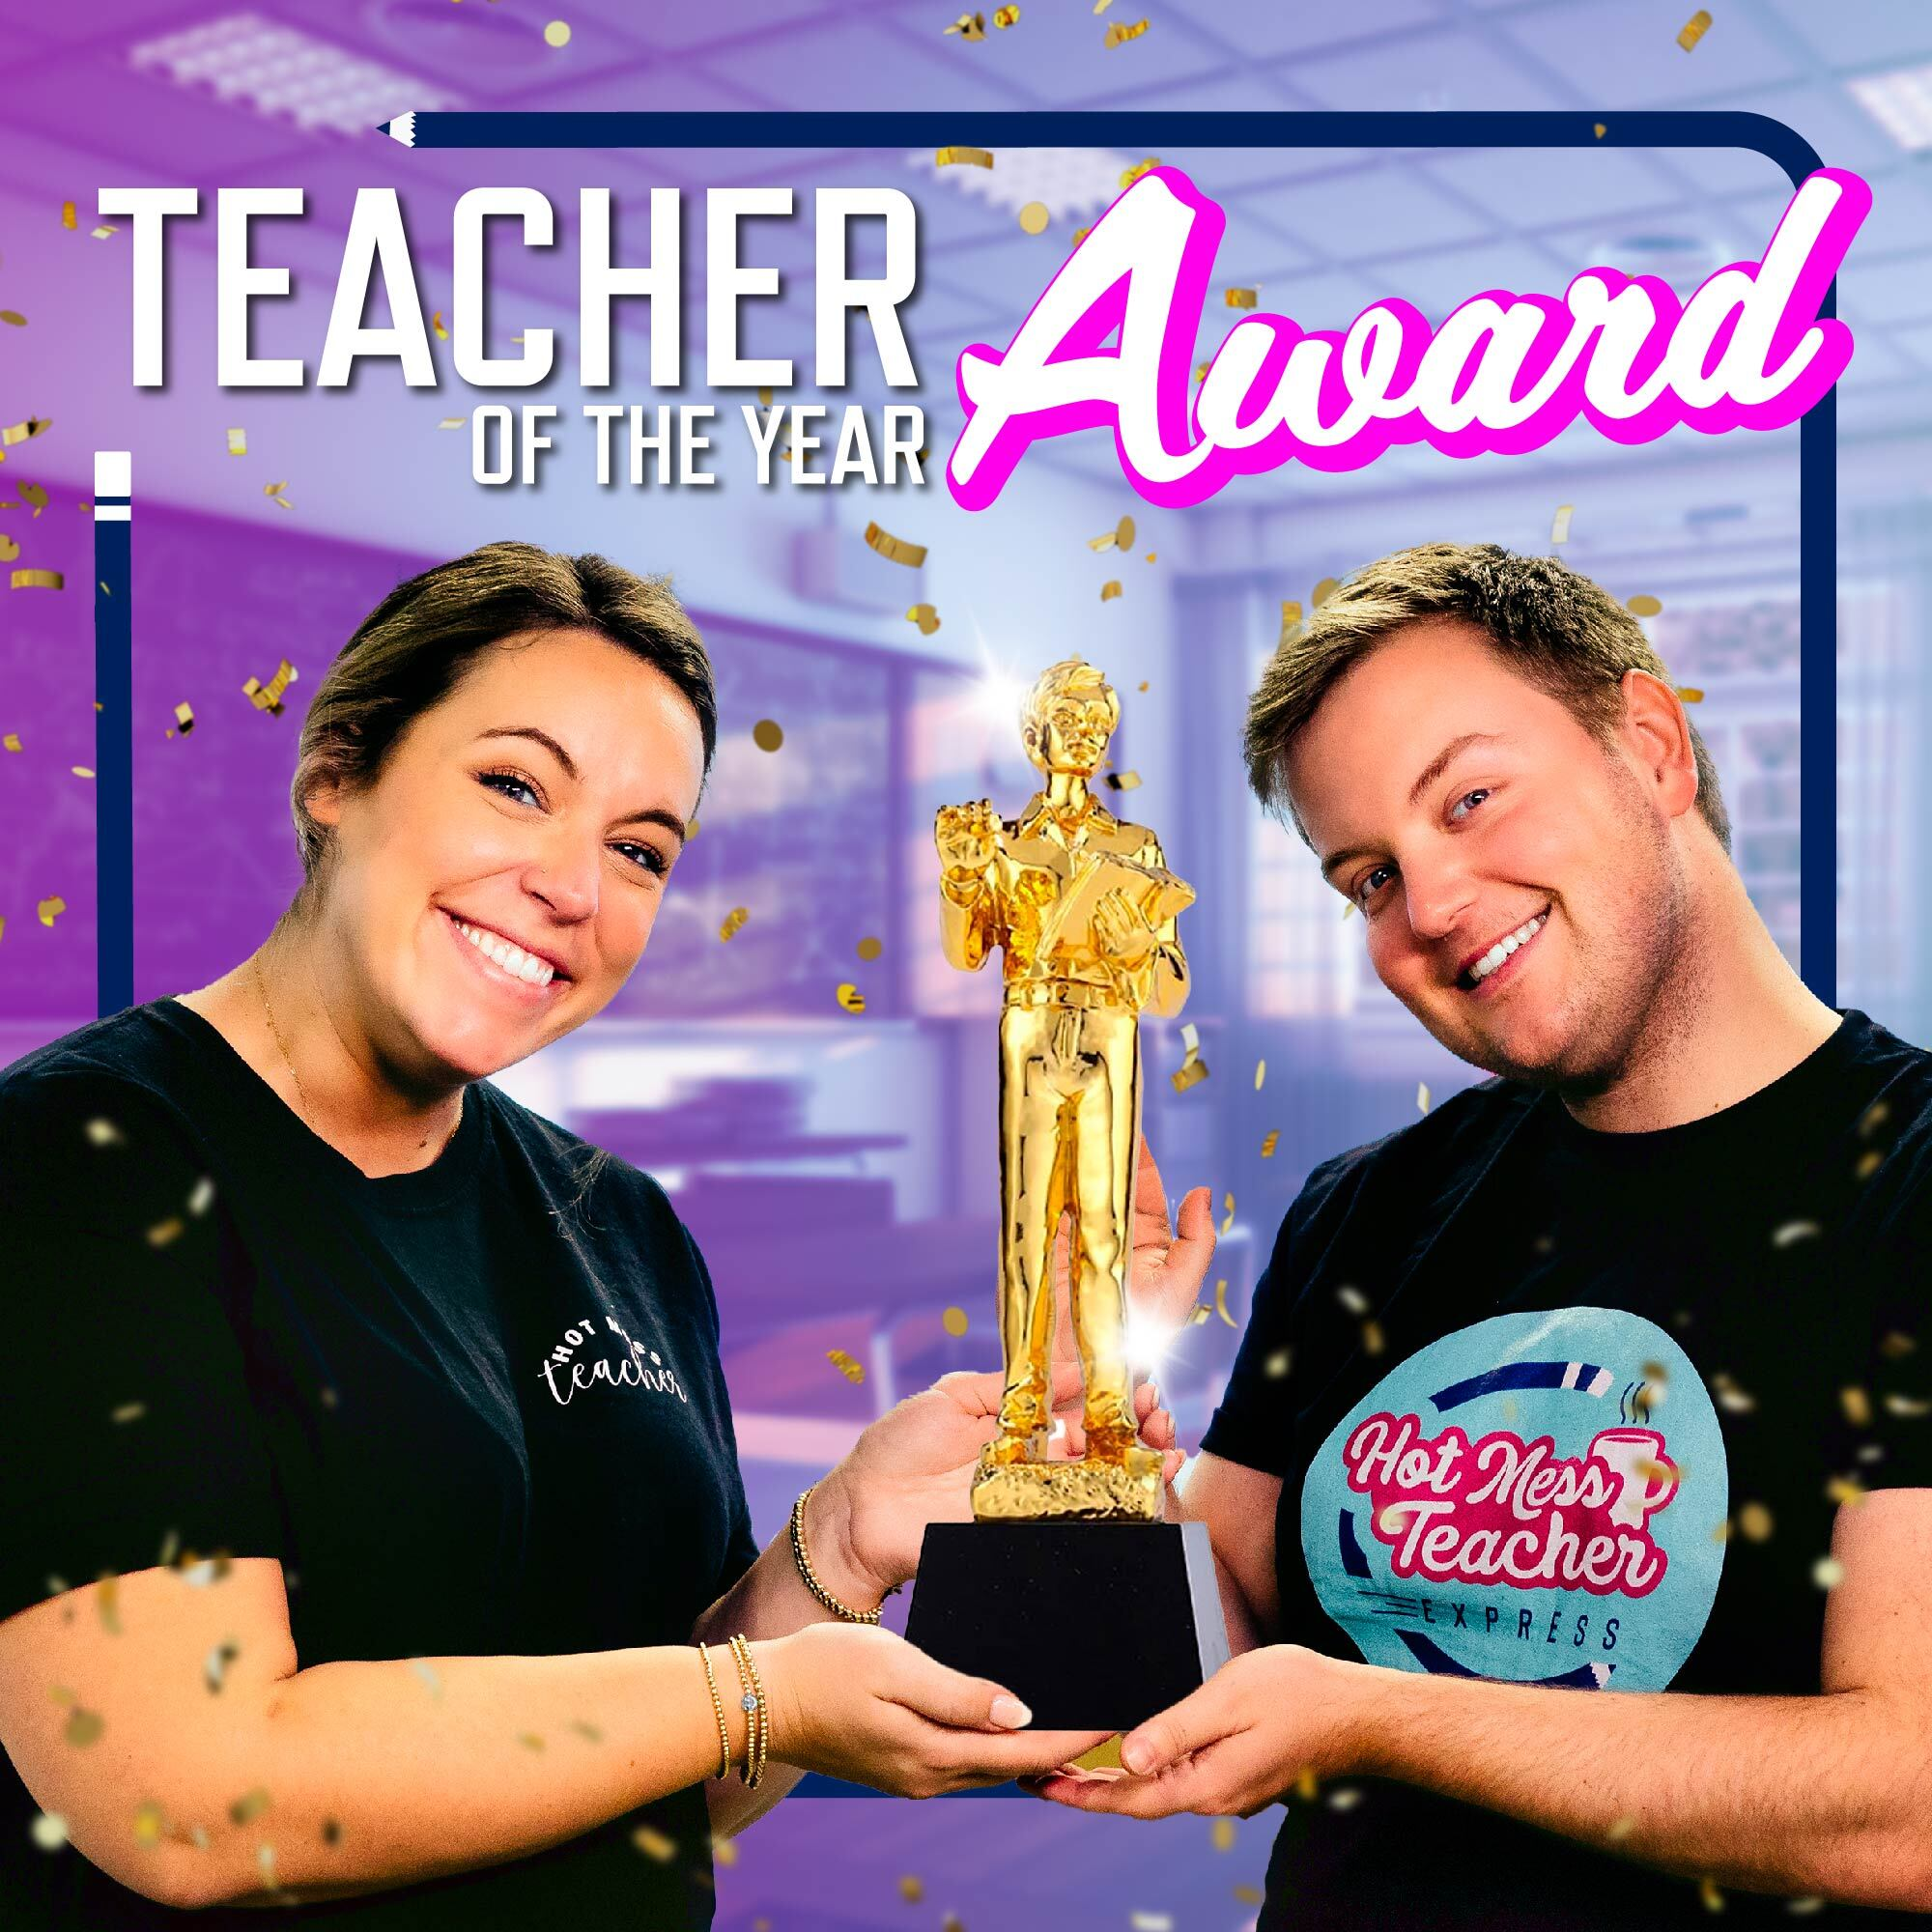 Winning the Teacher of the Year Award